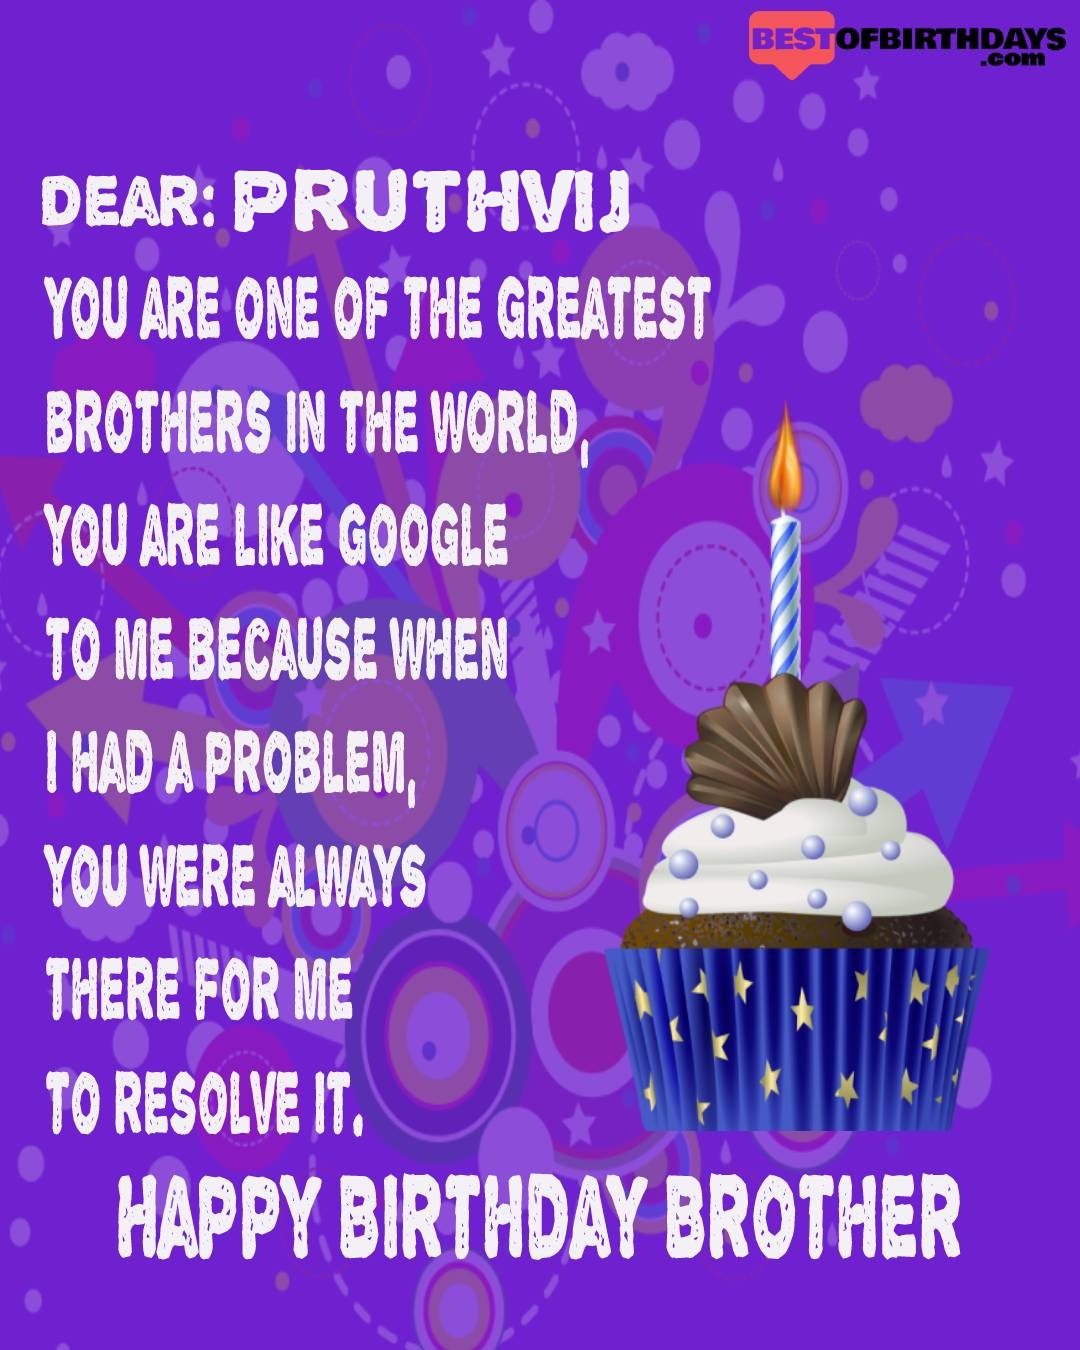 Happy birthday pruthvij bhai brother bro